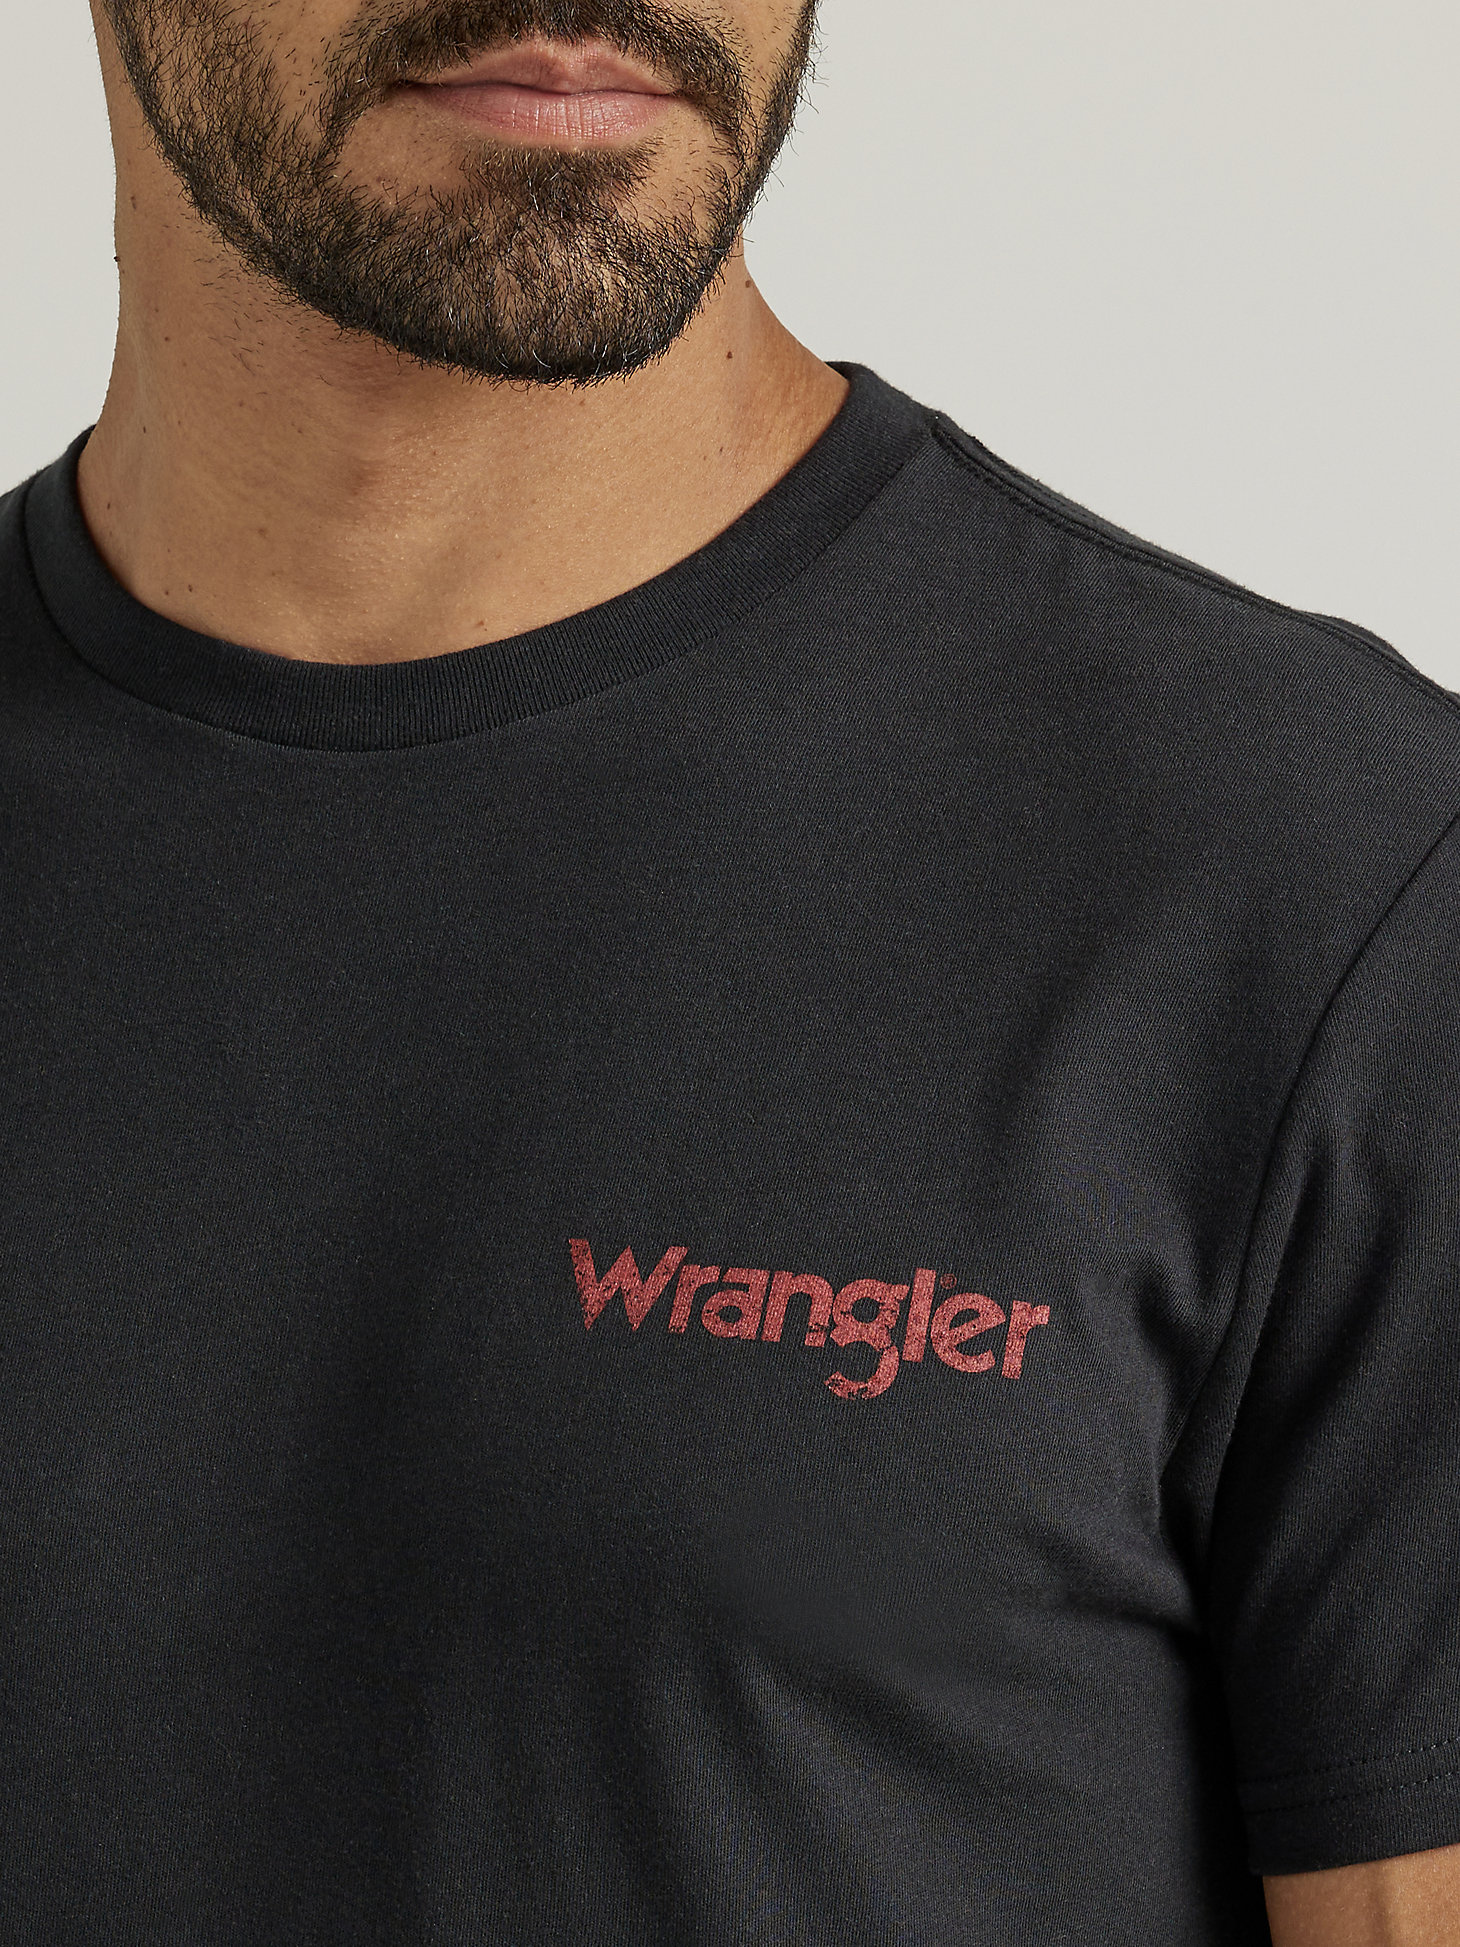 Wrangler® George Strait™ Back Graphic T-Shirt in Jet Black alternative view 2